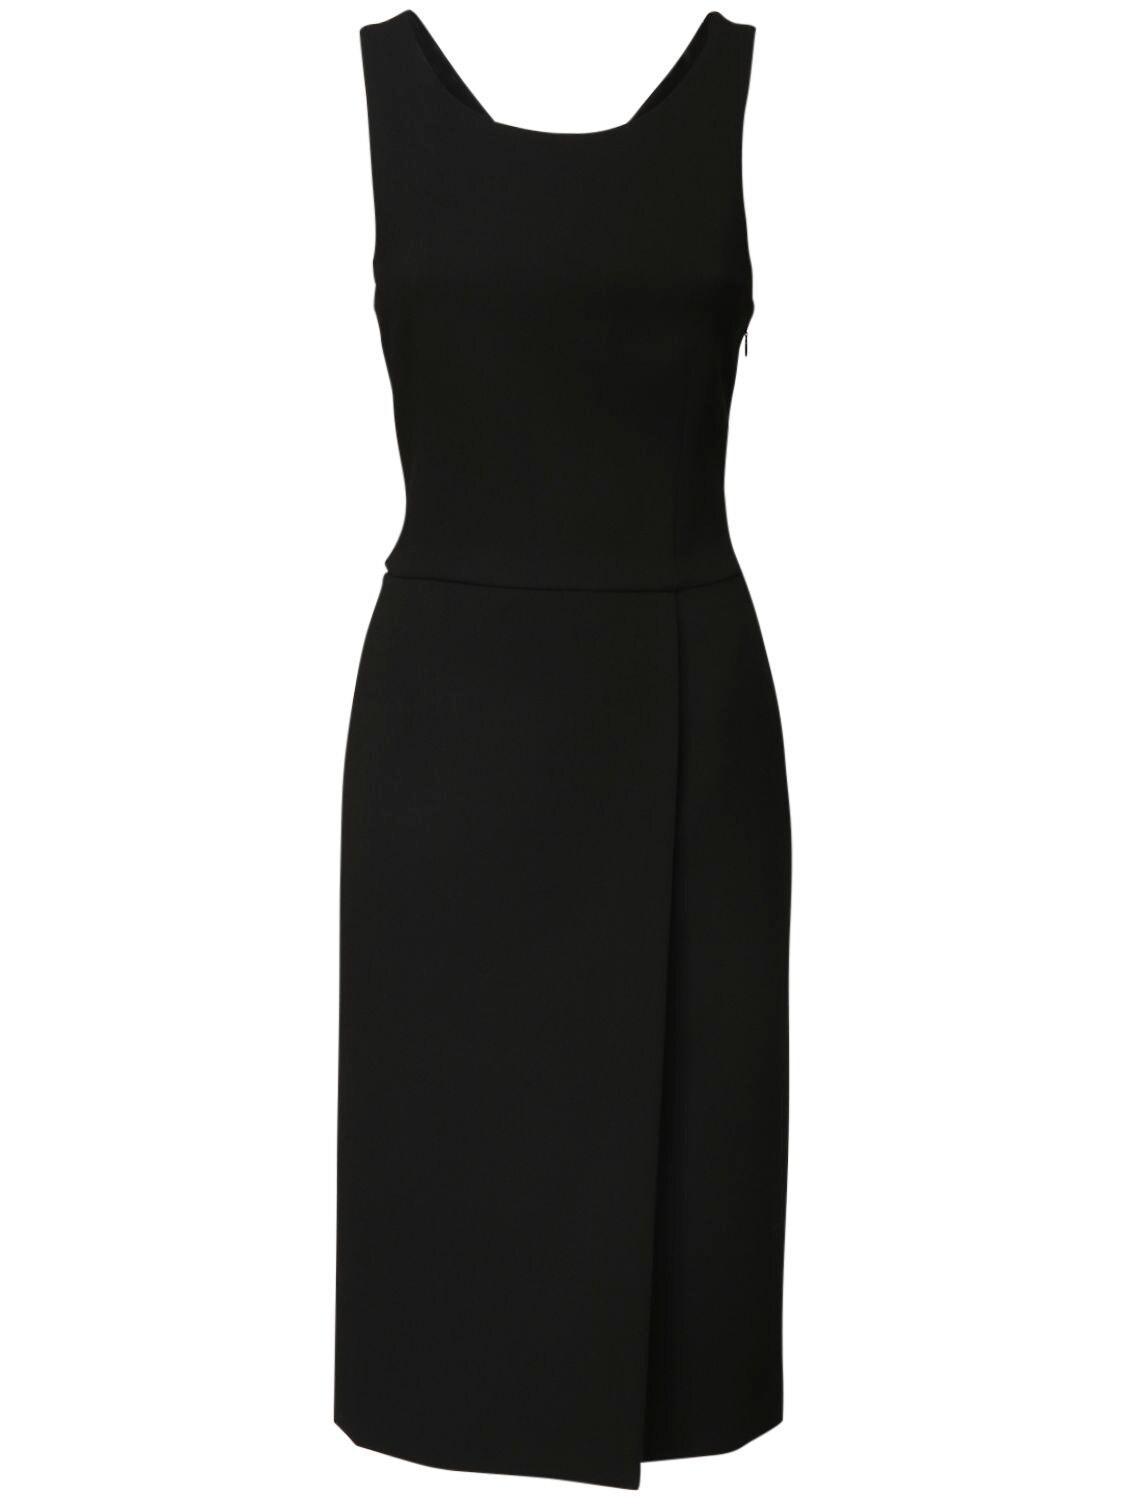 Givenchy Tiffany Wool Crepe Midi Dress in Black - Lyst